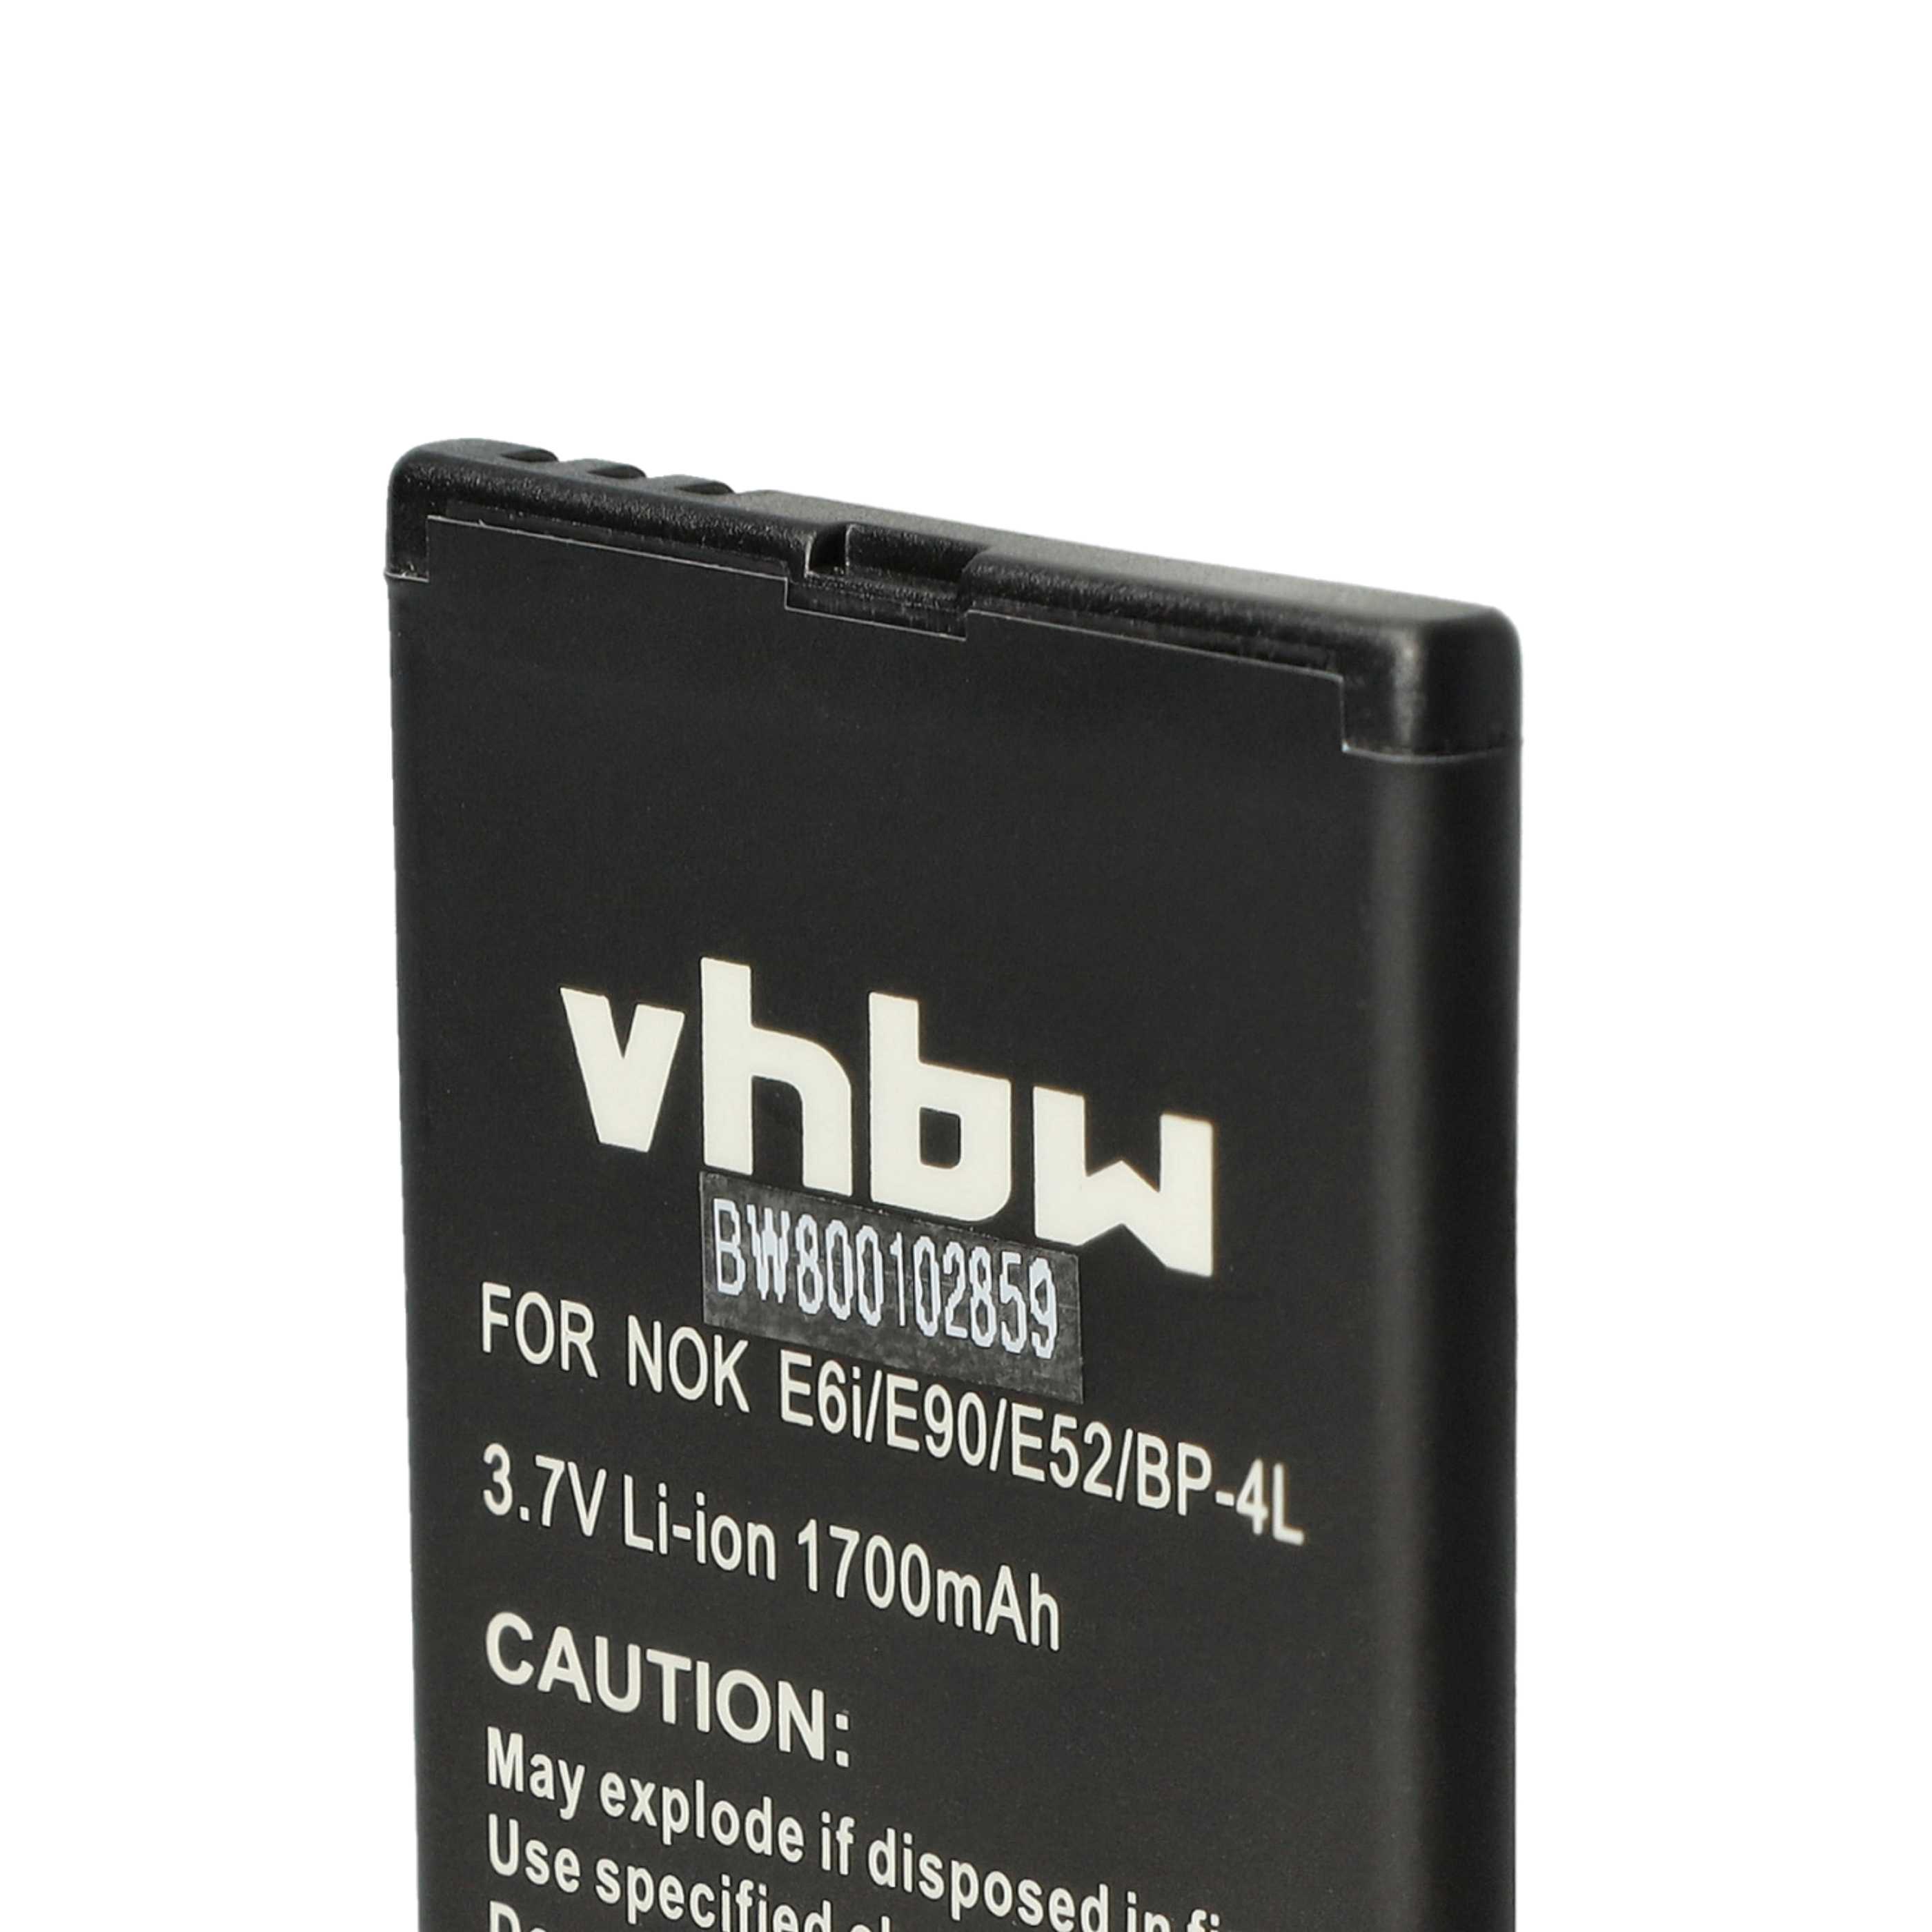 Batería reemplaza Aligator D243, BL-6900, BP-140, A800BAL para móvil, teléfono Hyundai - 1700 mAh 3,7 V Li-Ion